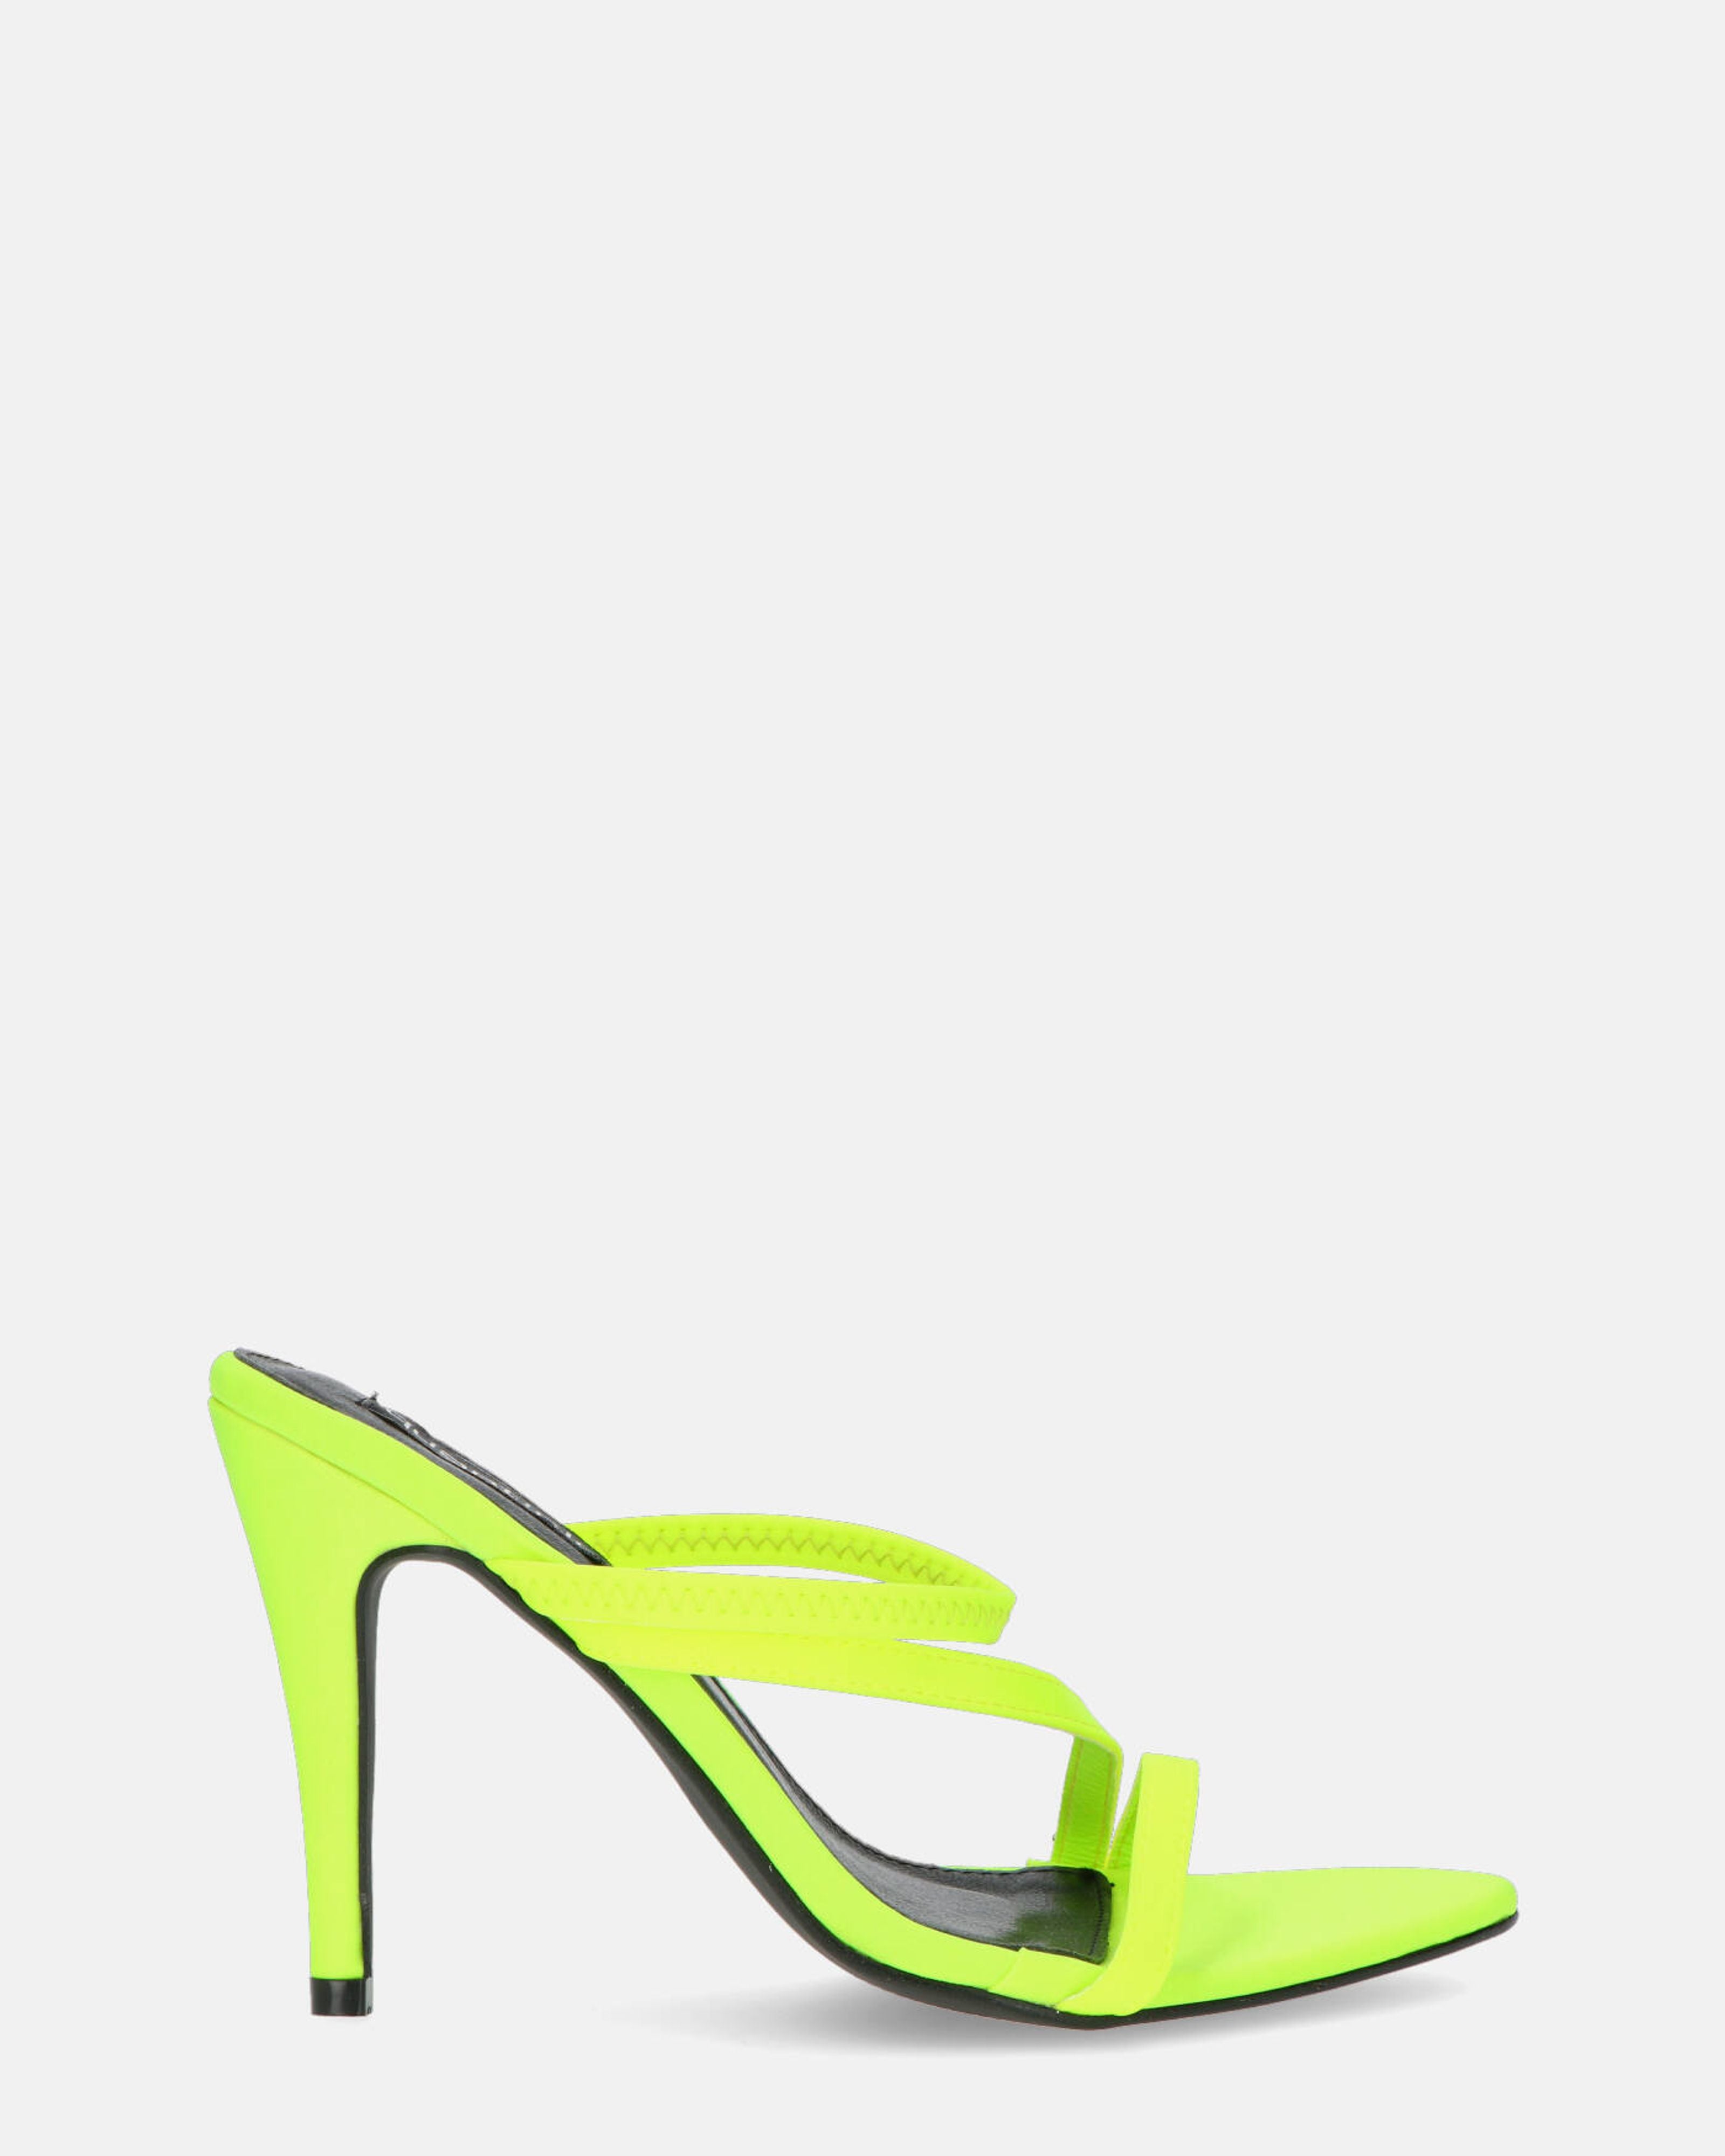 JUDY - yellow stiletto heel